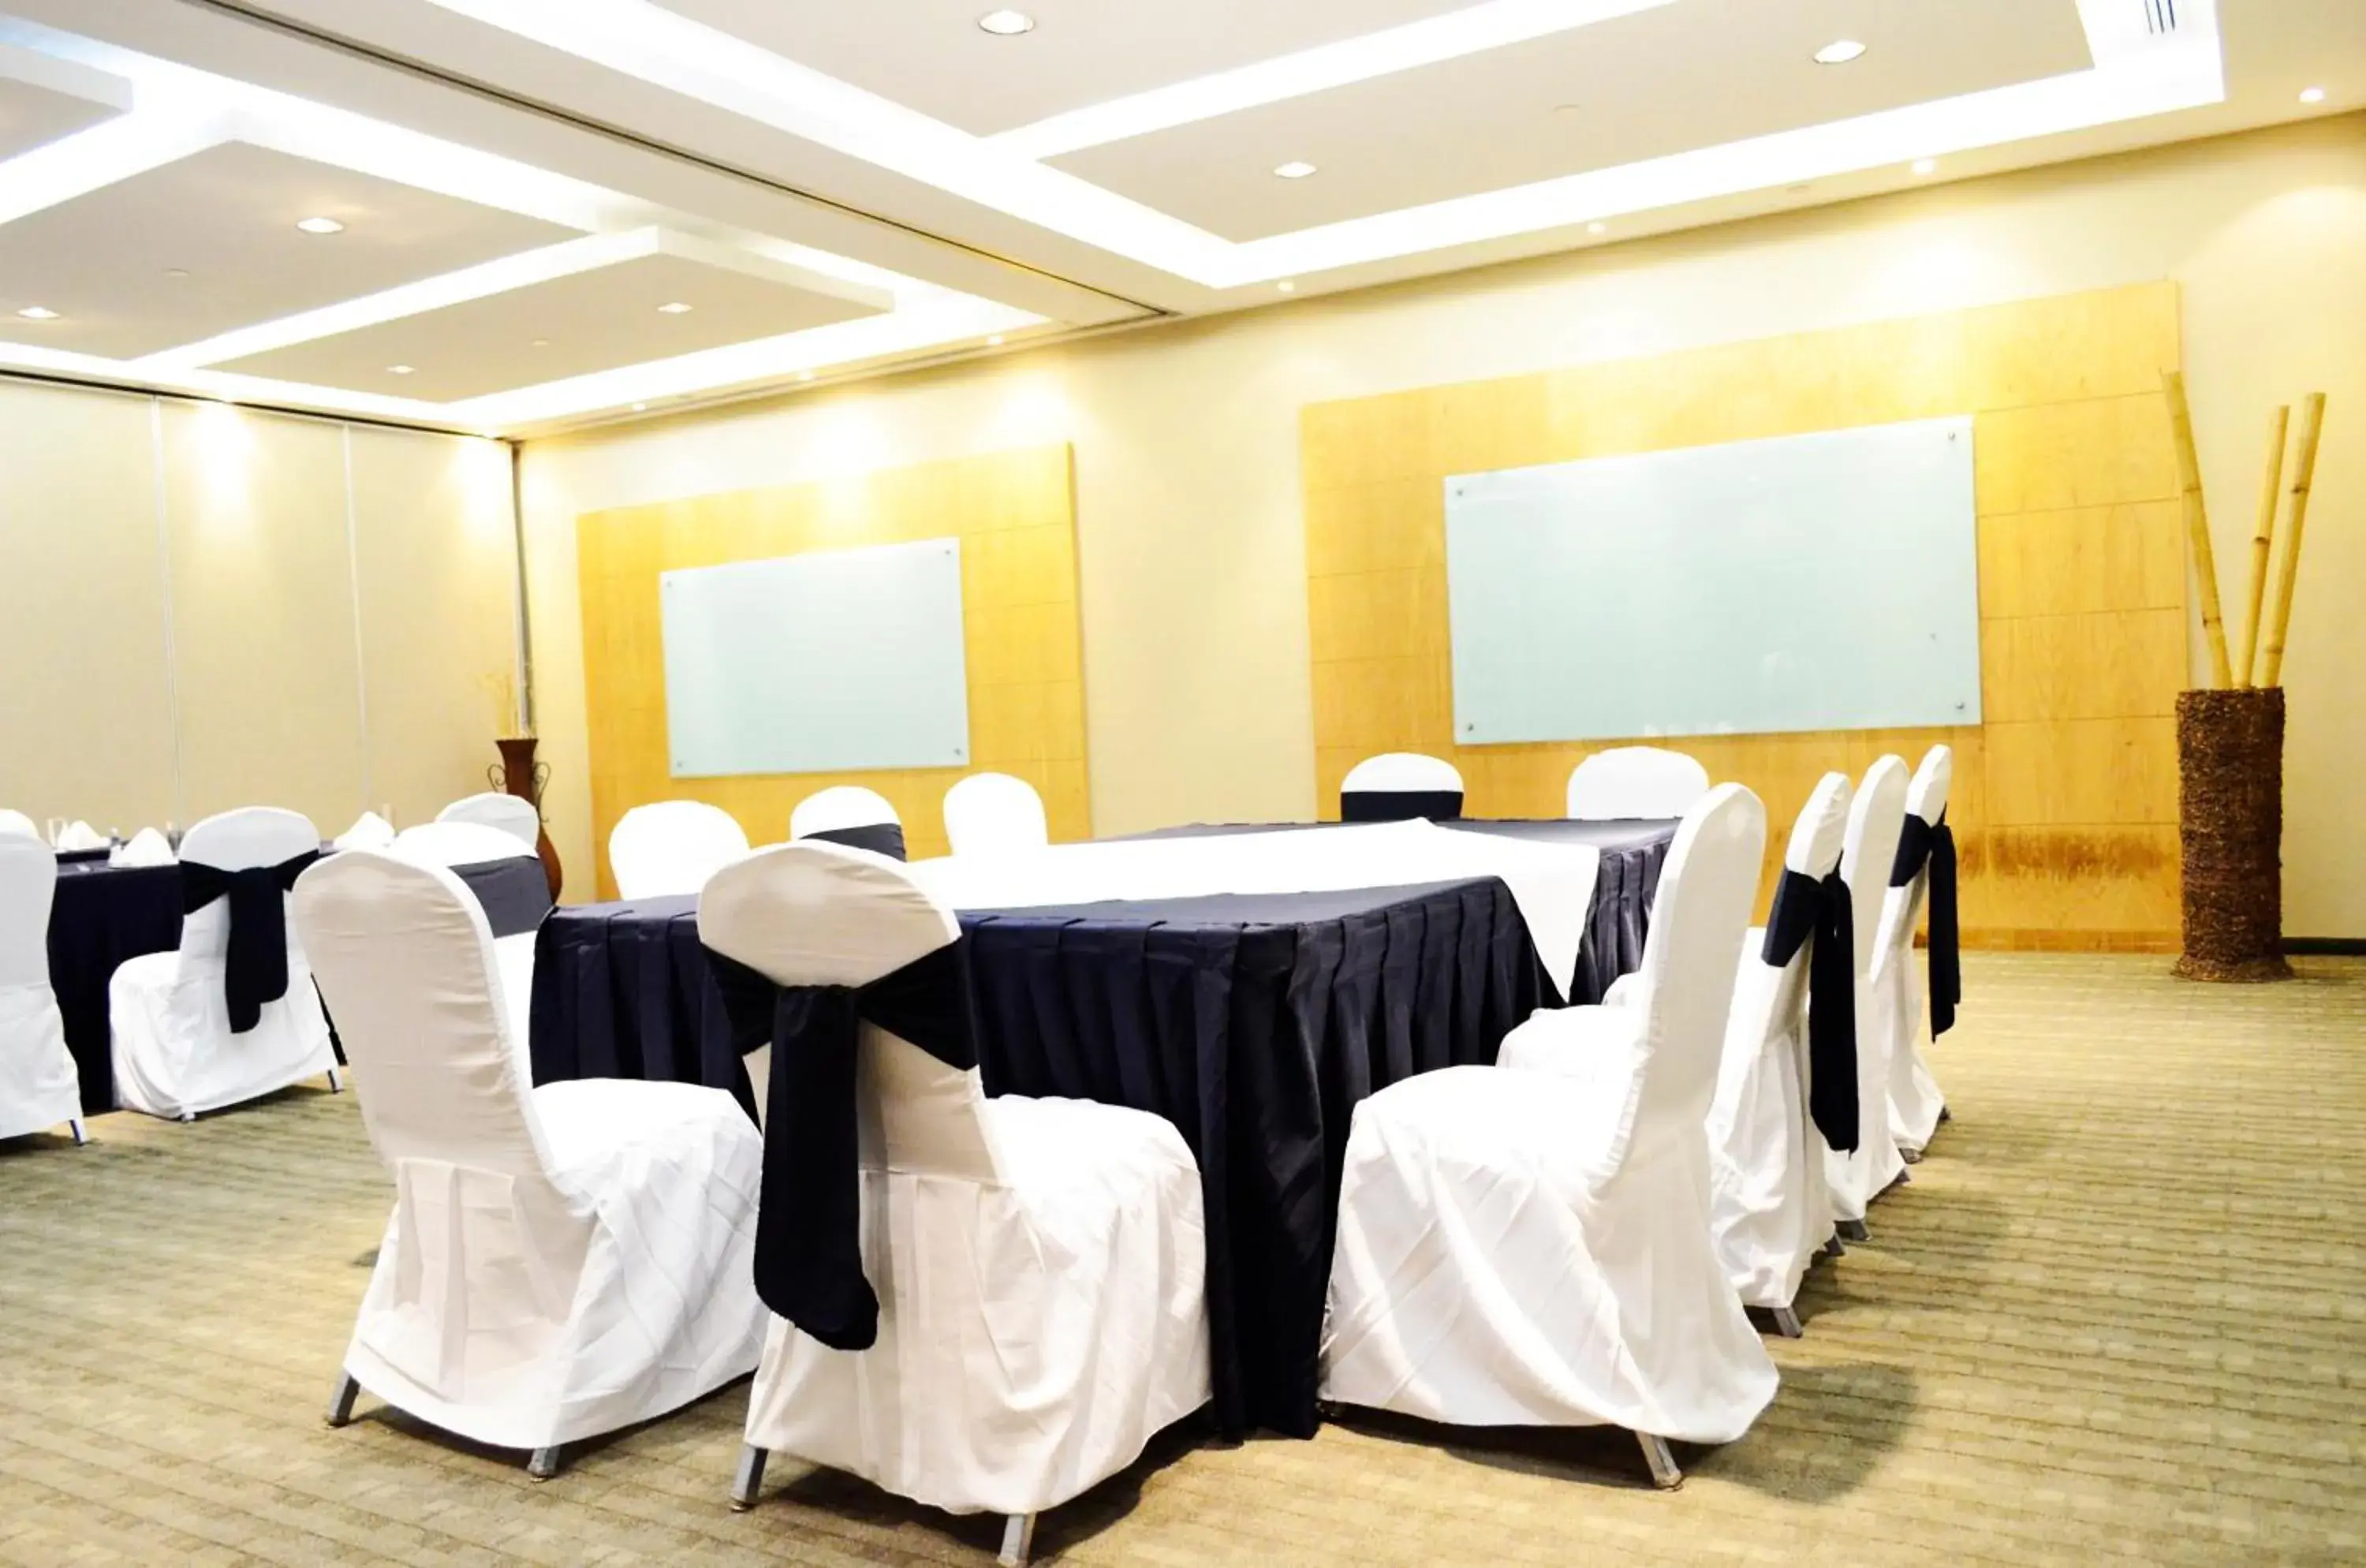 Banquet/Function facilities, Banquet Facilities in Casa Inn Business Hotel Celaya